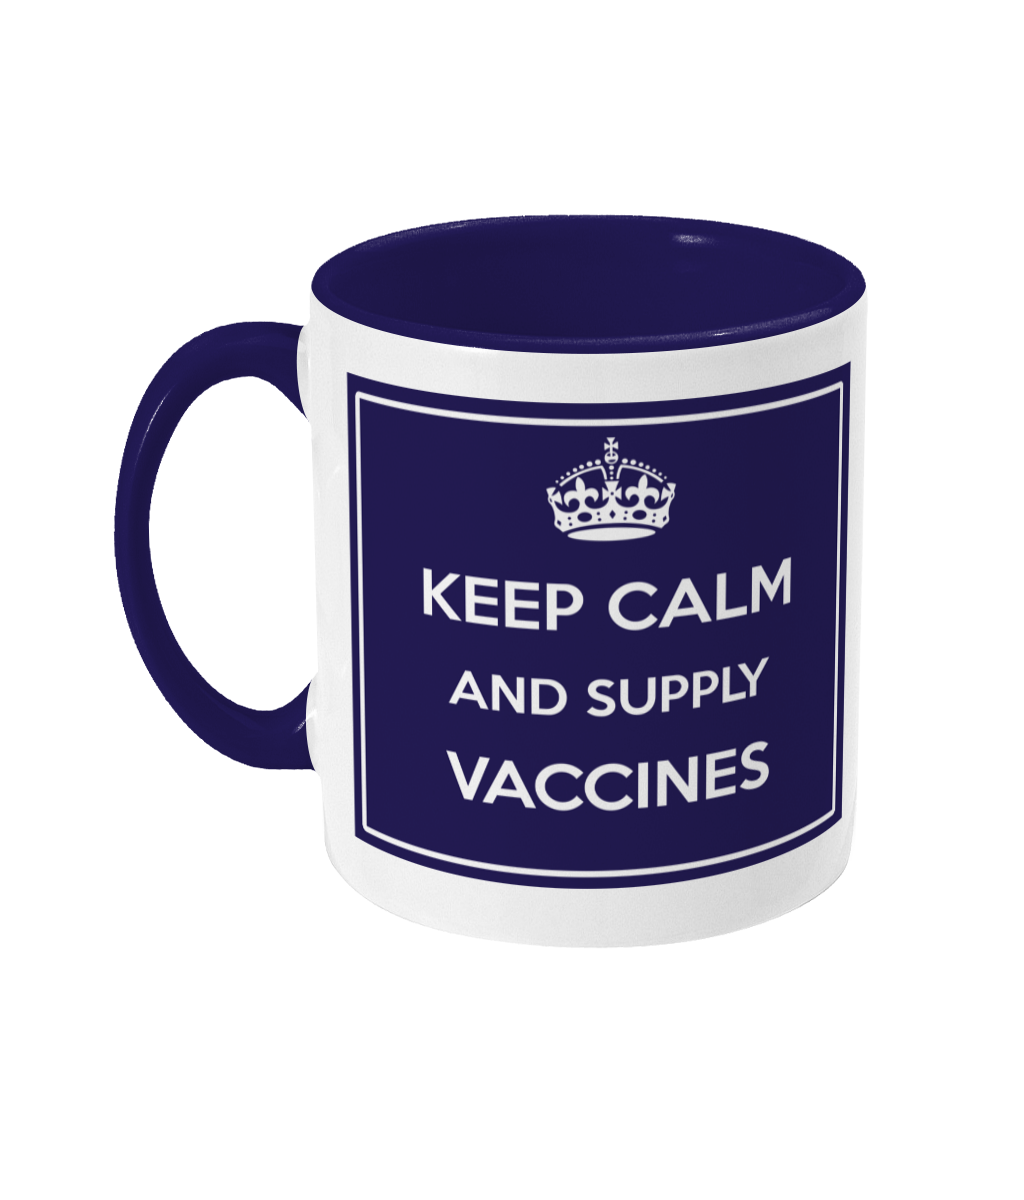 Vaccine mug Supply Vaccines